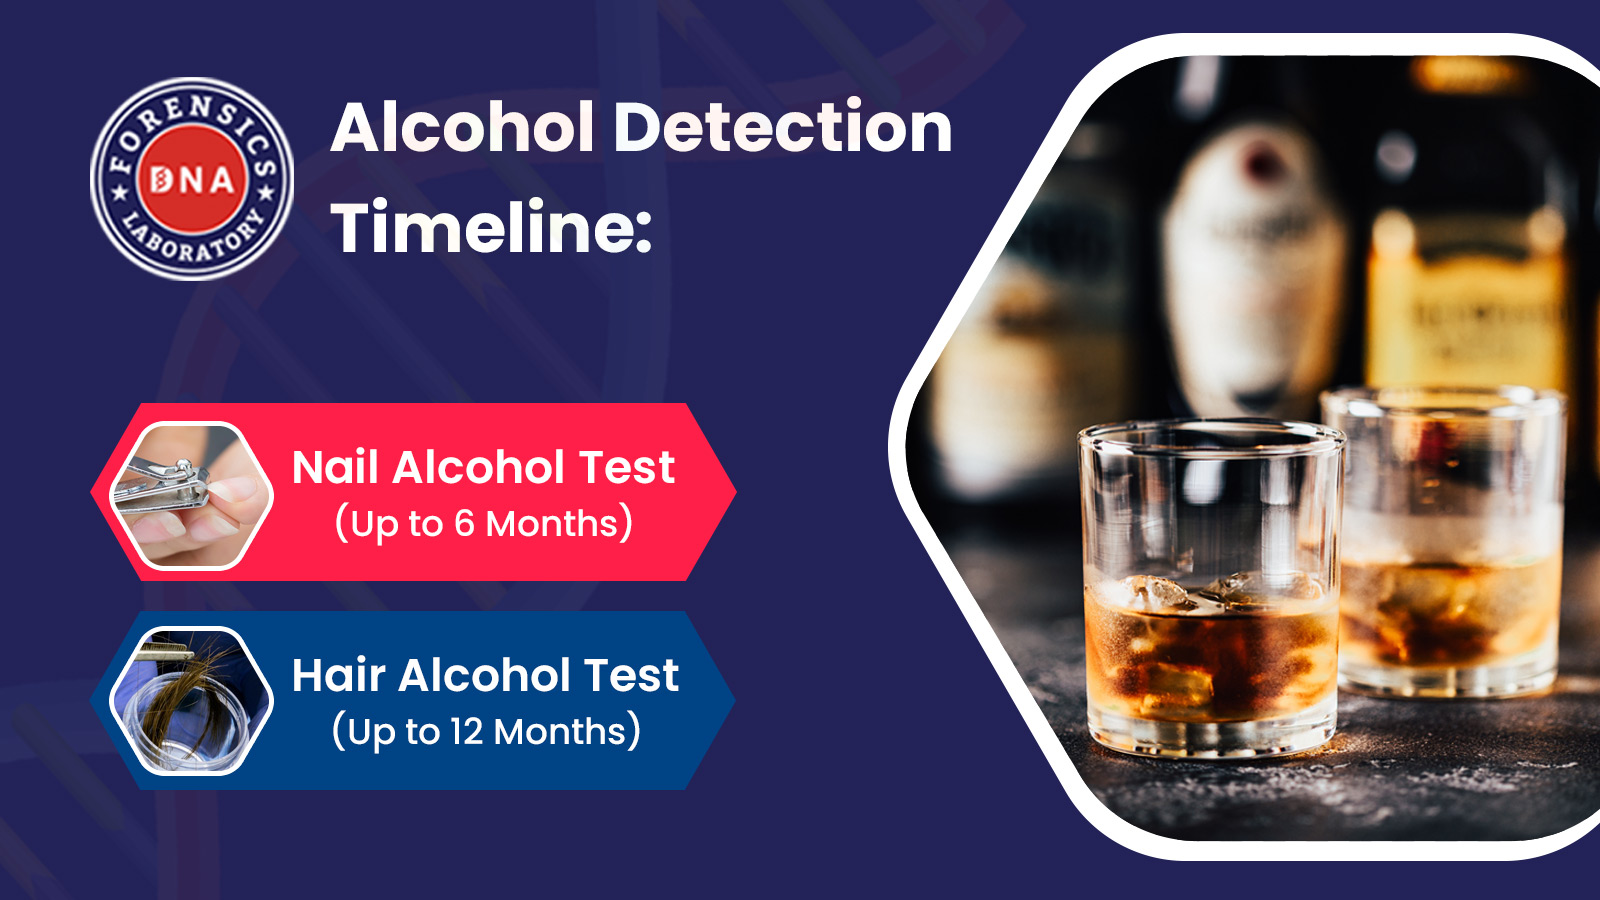 Alcohol detection timeline